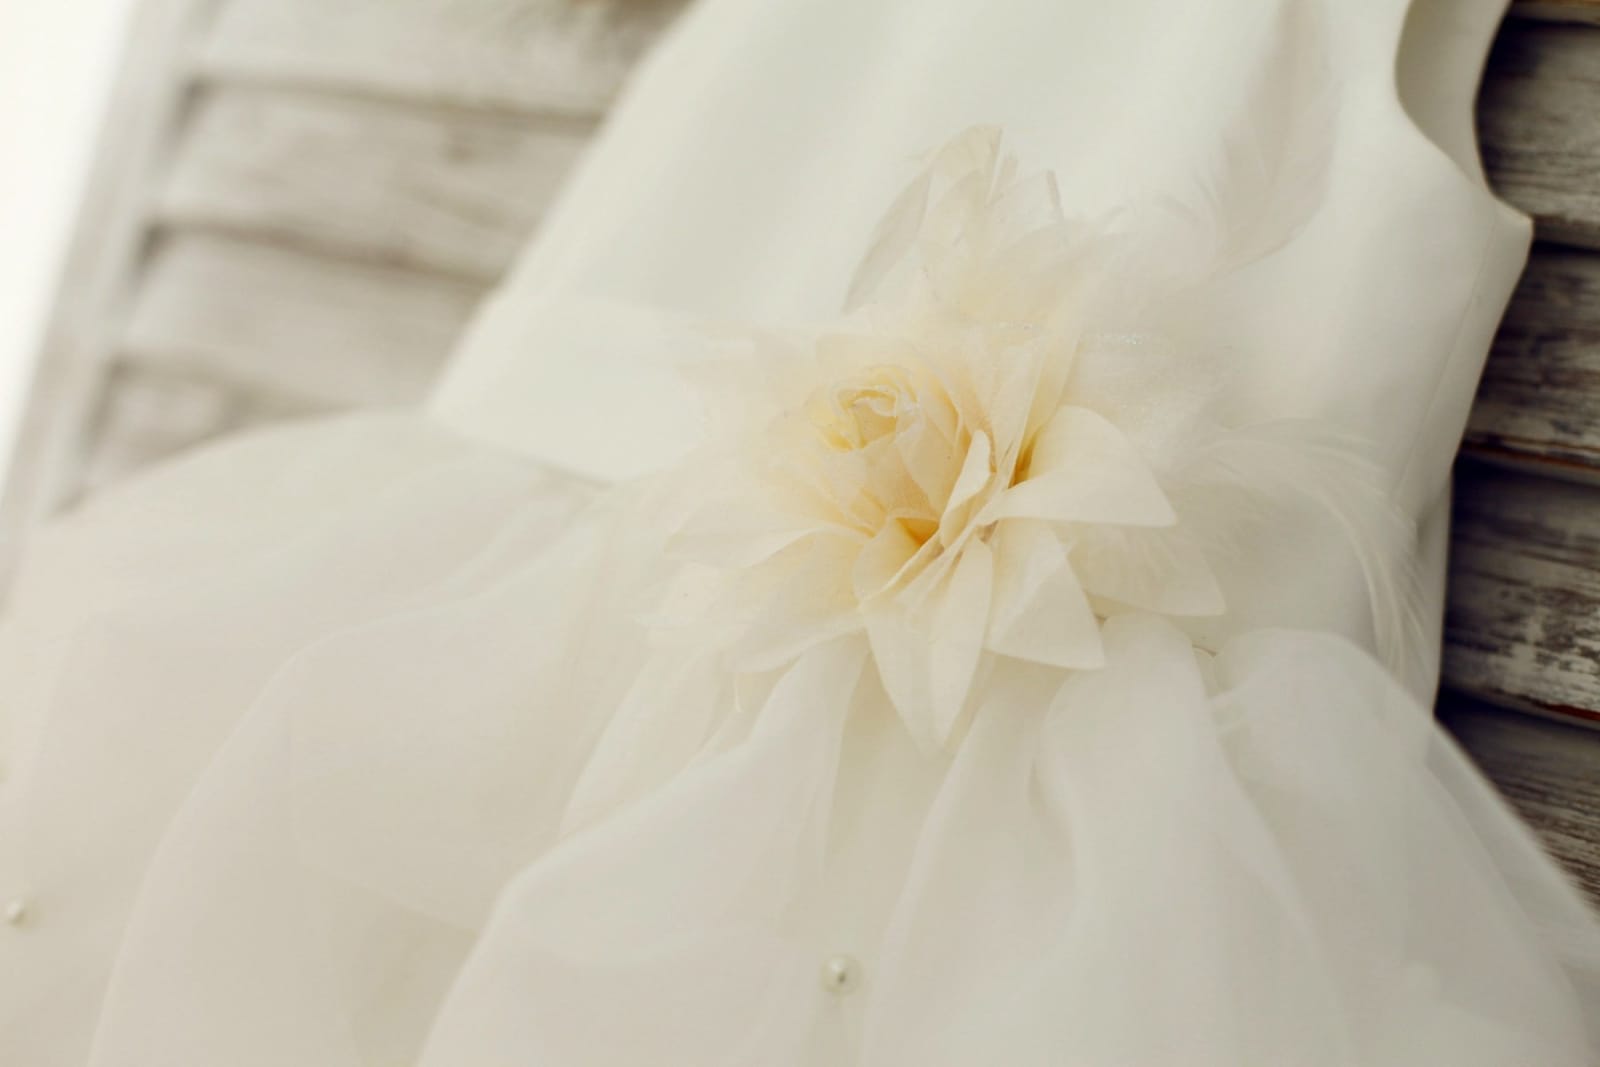 Ivory Satin Organza Ruffle Ball Gown Flower Girl Dress, Feather Flower